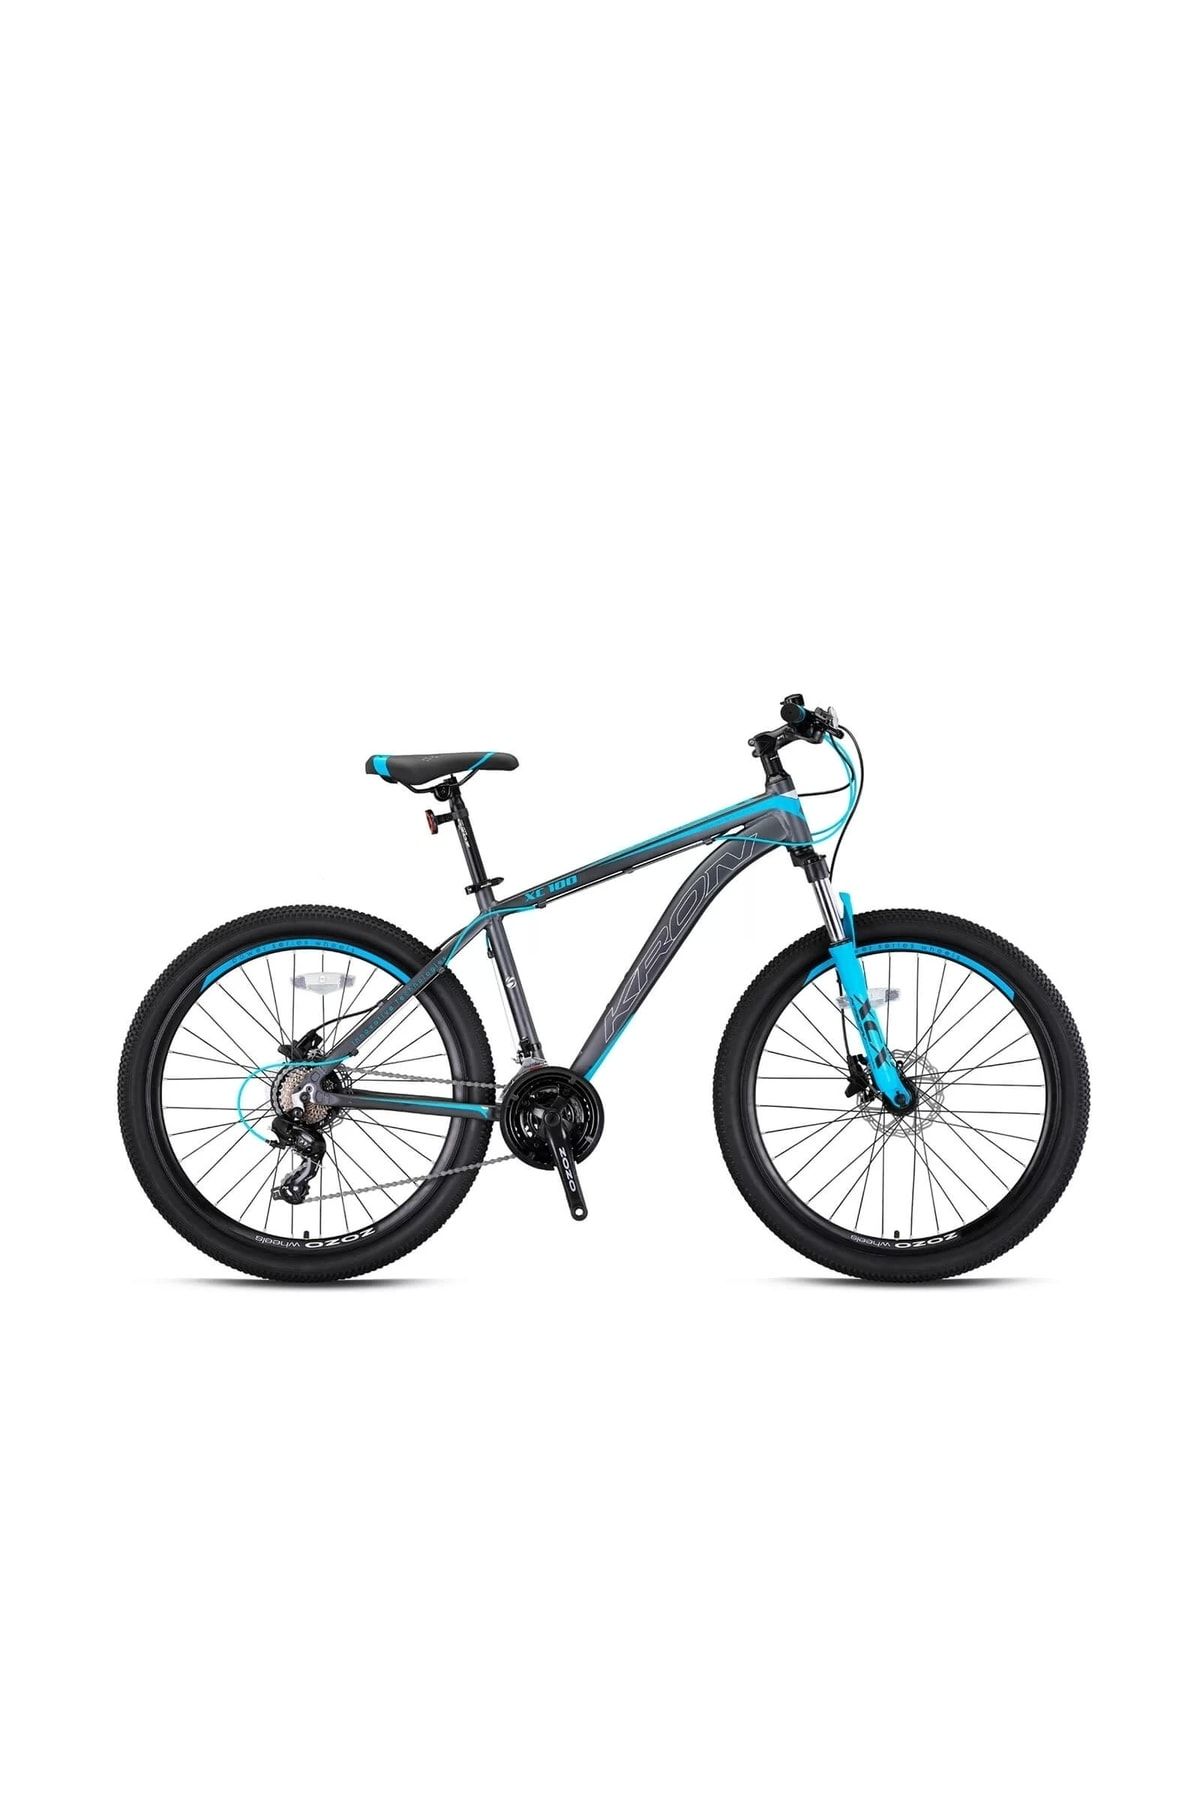 Kron Xc100 27.5 Hd 20 Erkek Dağ Bisikleti Füme - Mavi